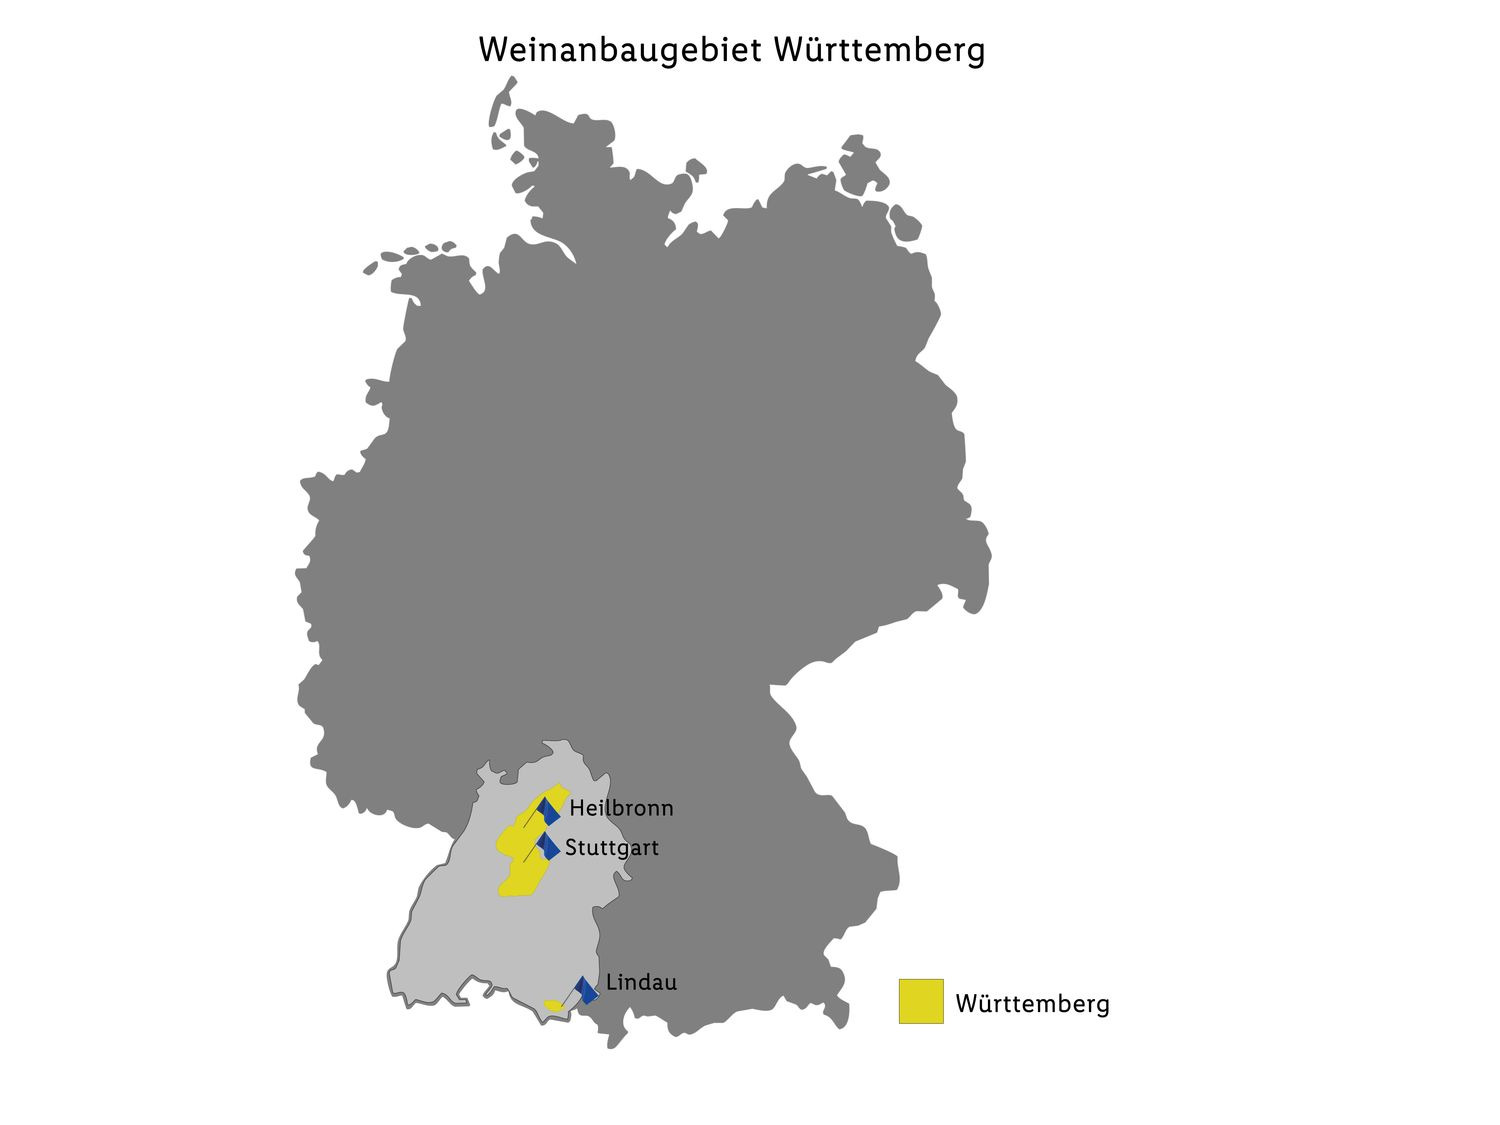 Schaubeck 1272 Grauburgunder Württemberg QbA … trocken